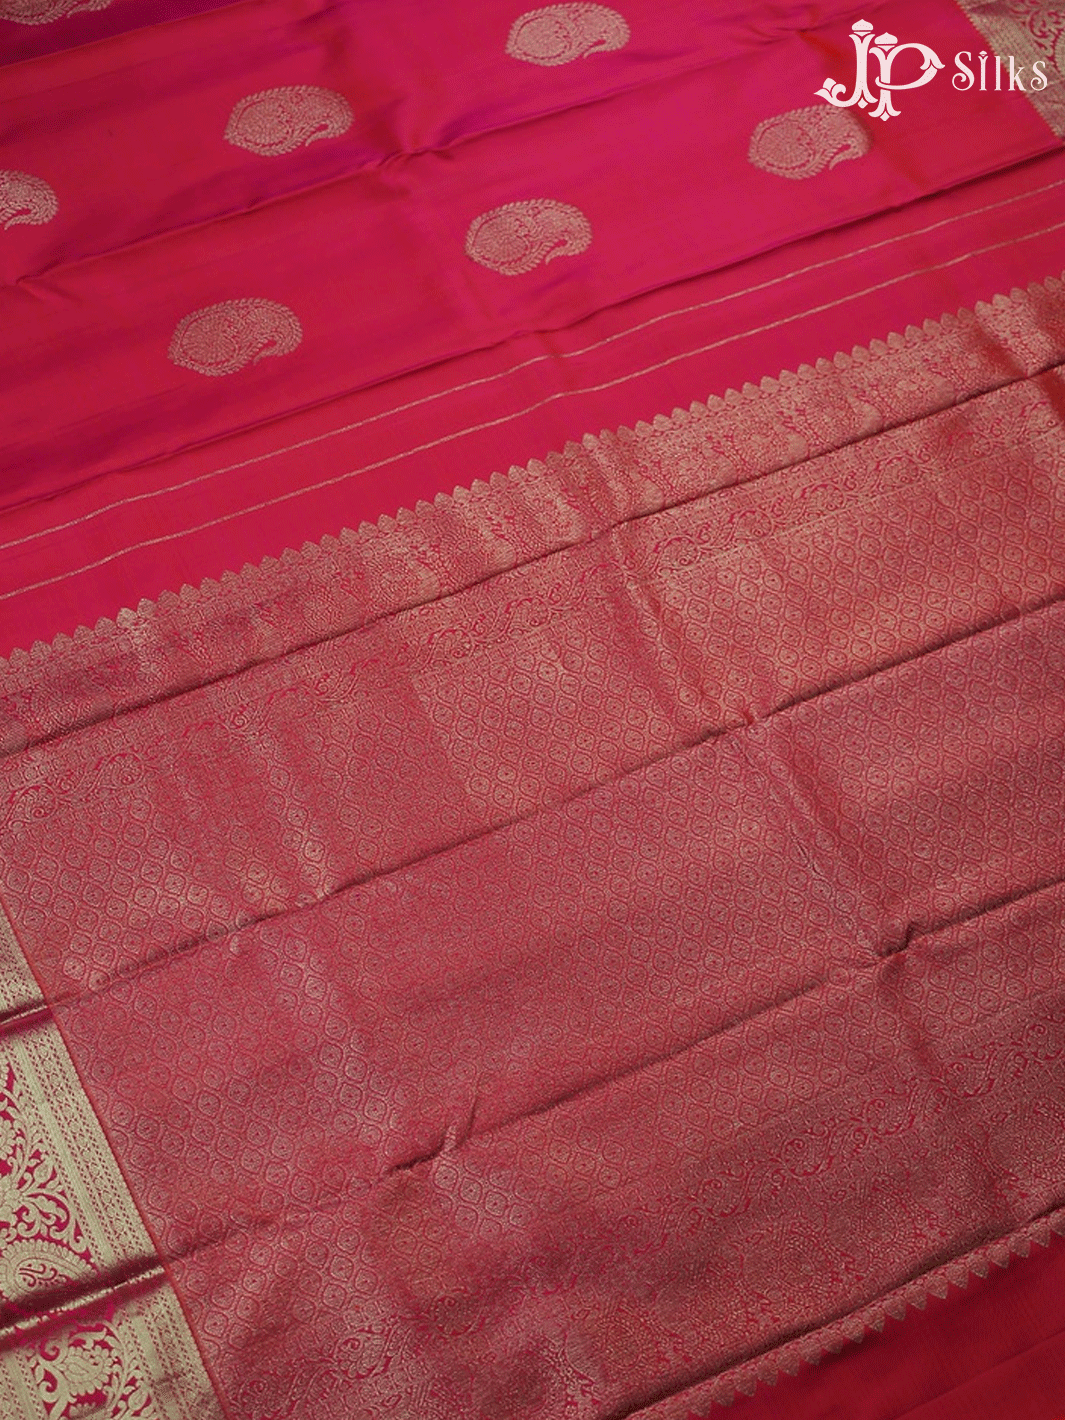 Pinkish Red Paisley Motif Kanchipuram Silk Saree - A1328 - View 5